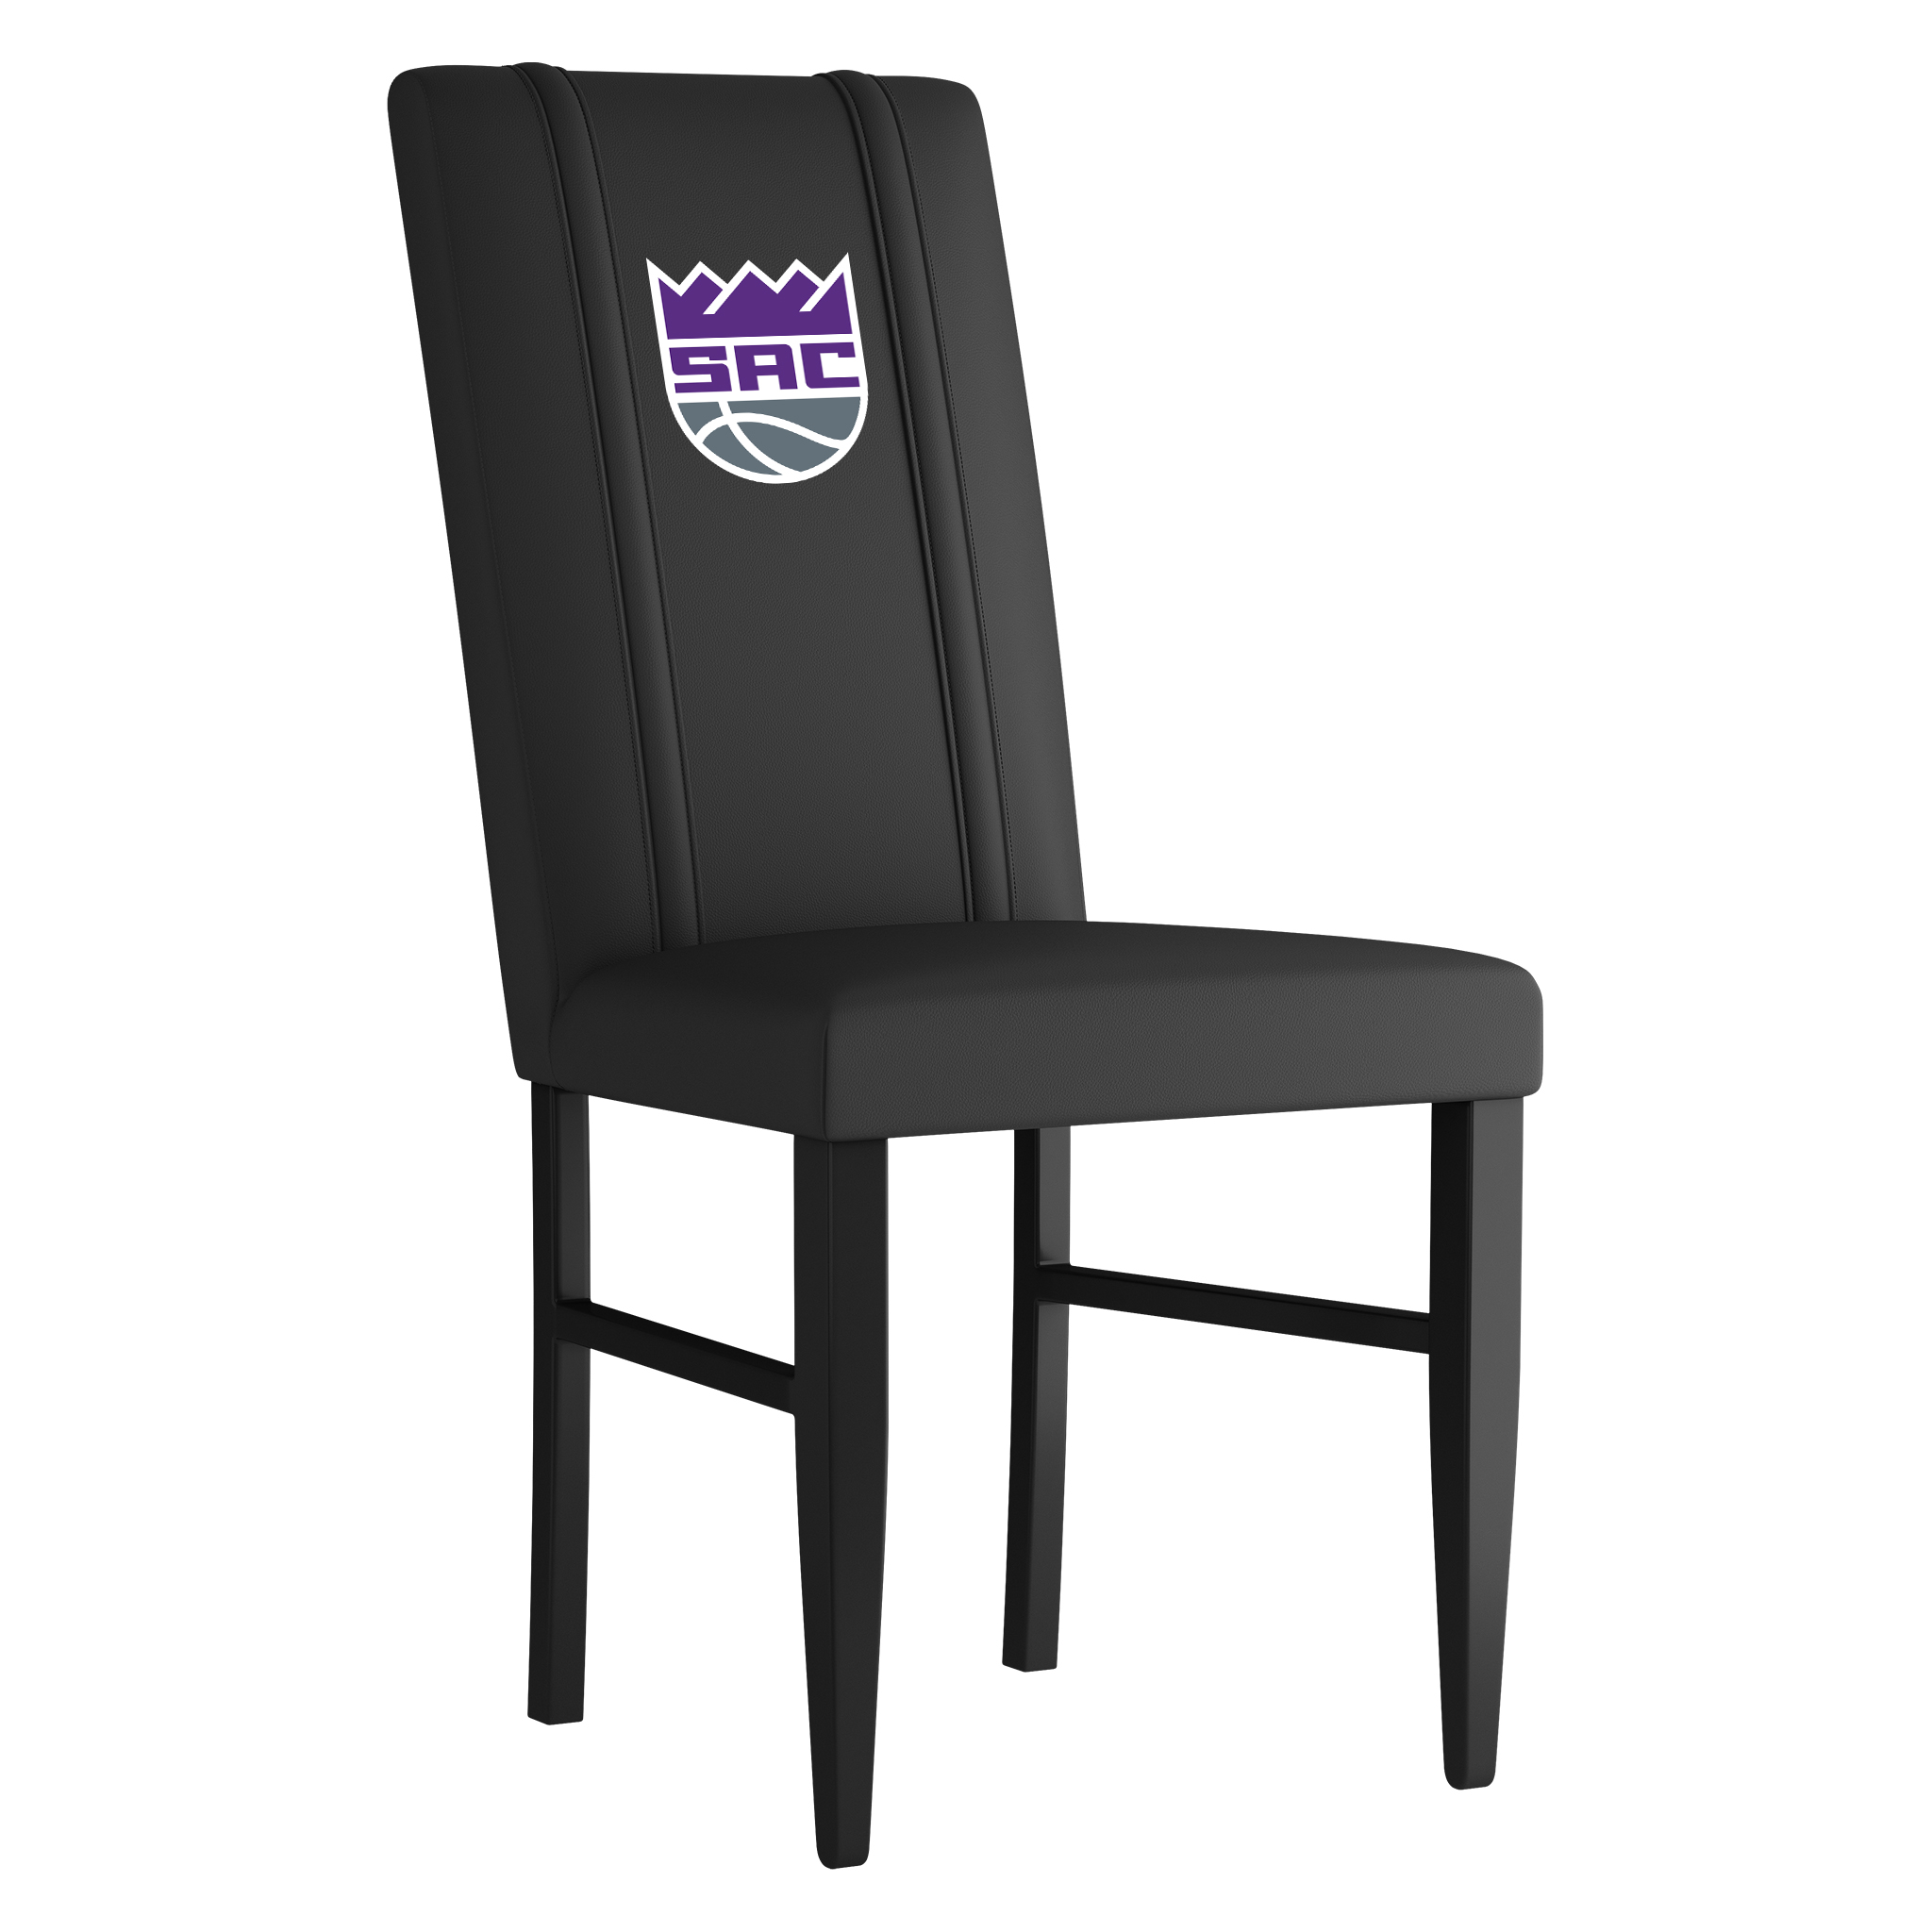 Sacramento Kings Side Chair 2000 With Sacramento Kings Secondary Logo